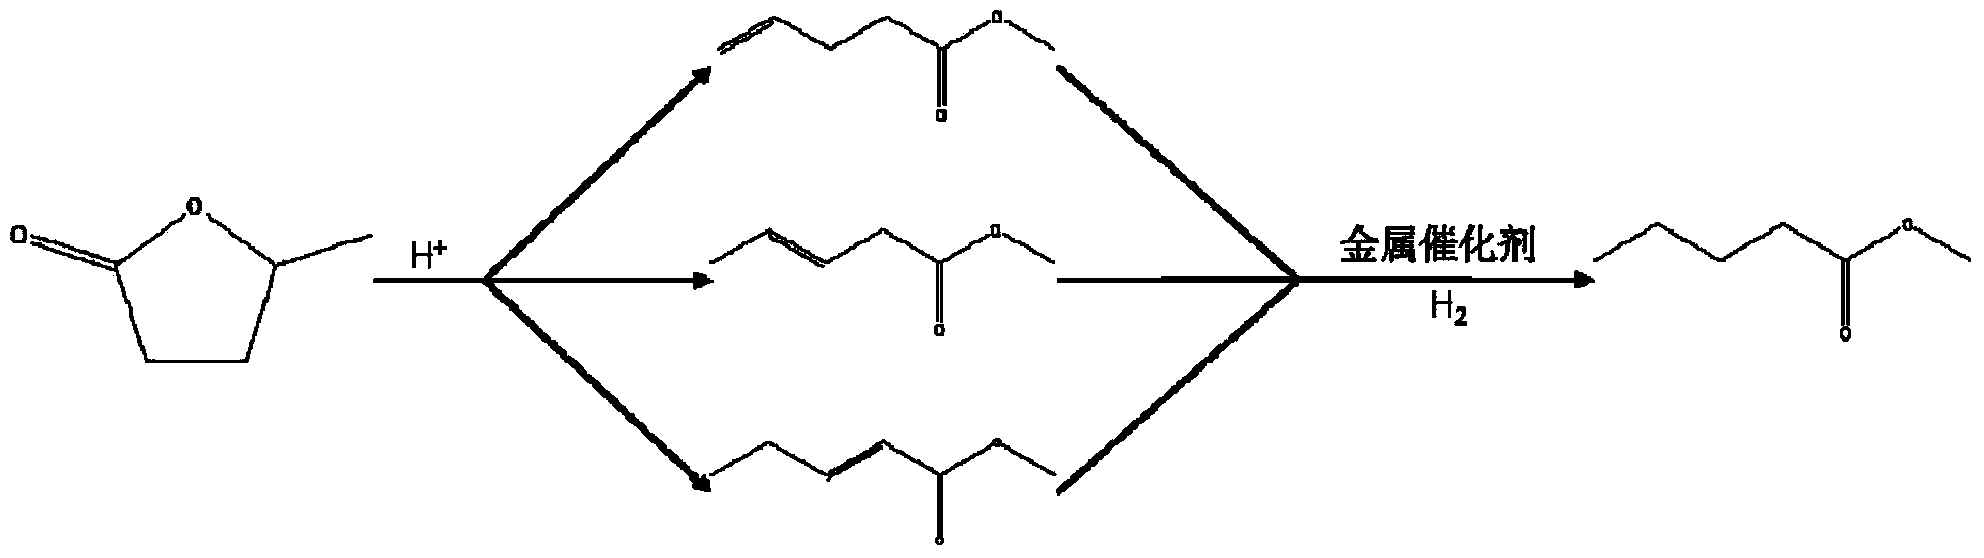 Method for preparing methyl 4-methoxy valerate from gamma-valerolactone